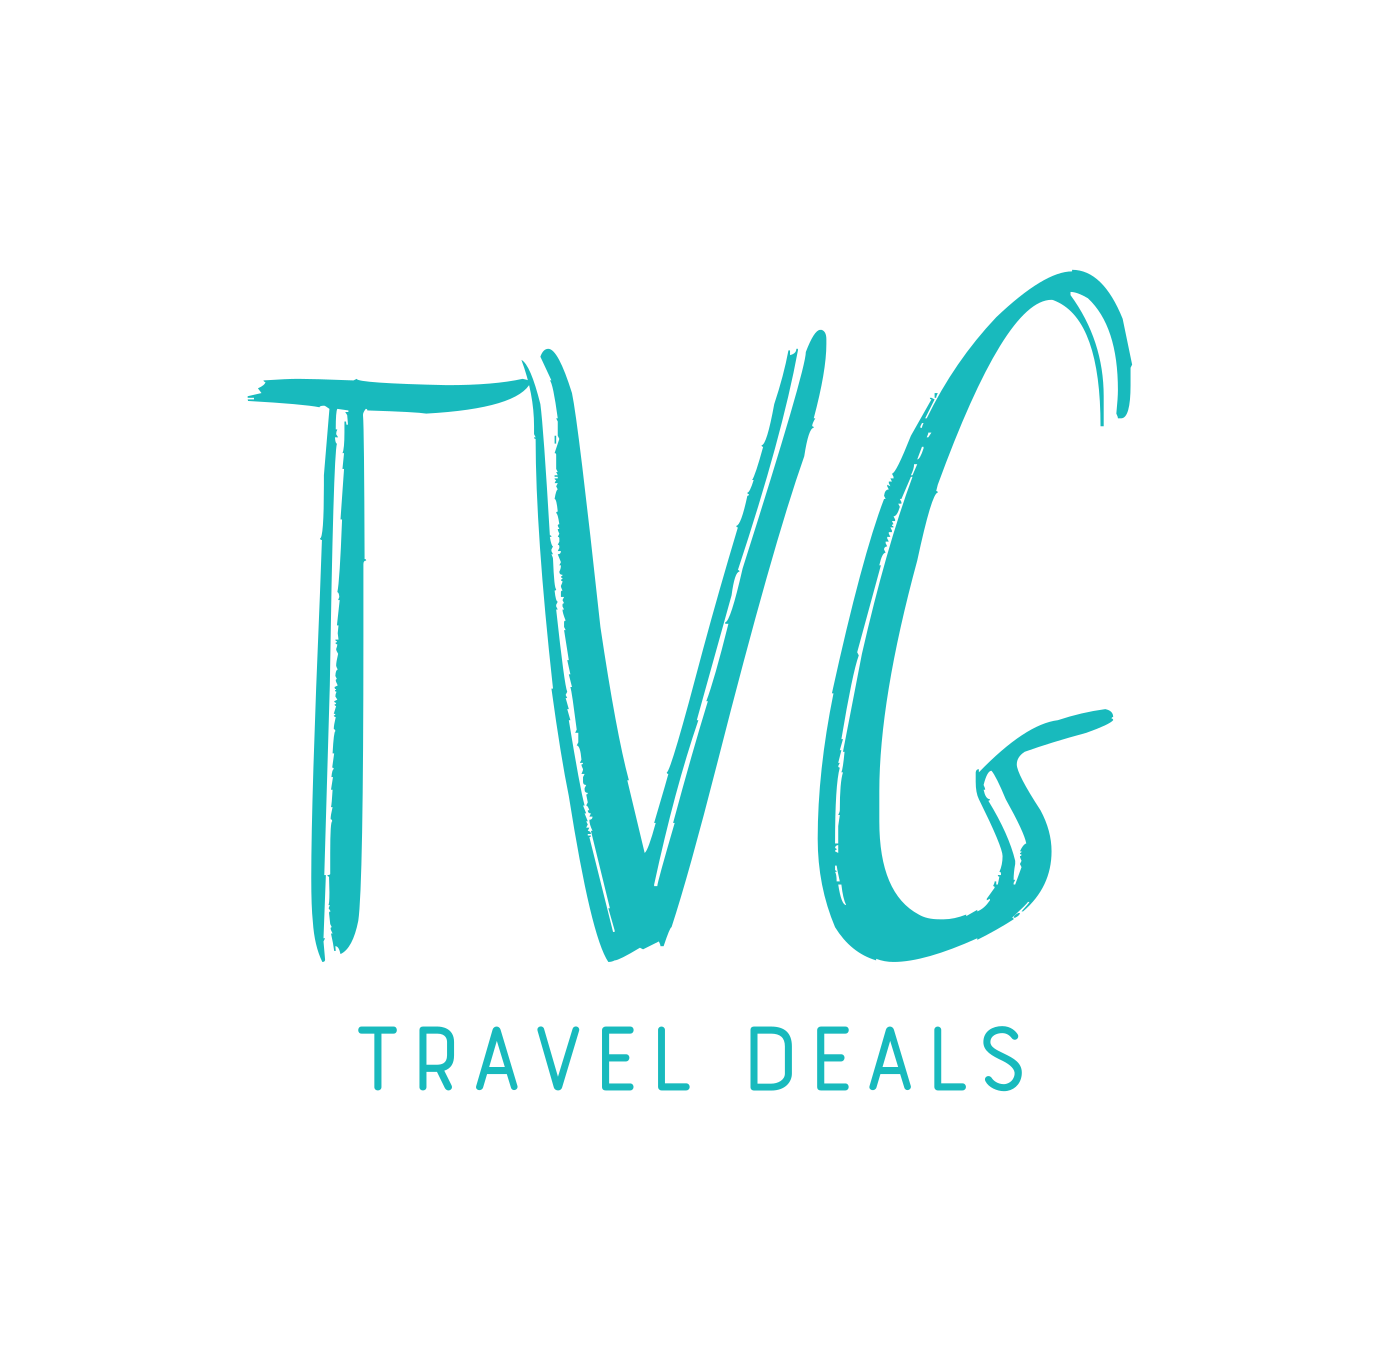 TVG TRAVEL AND TOURSIM LLC